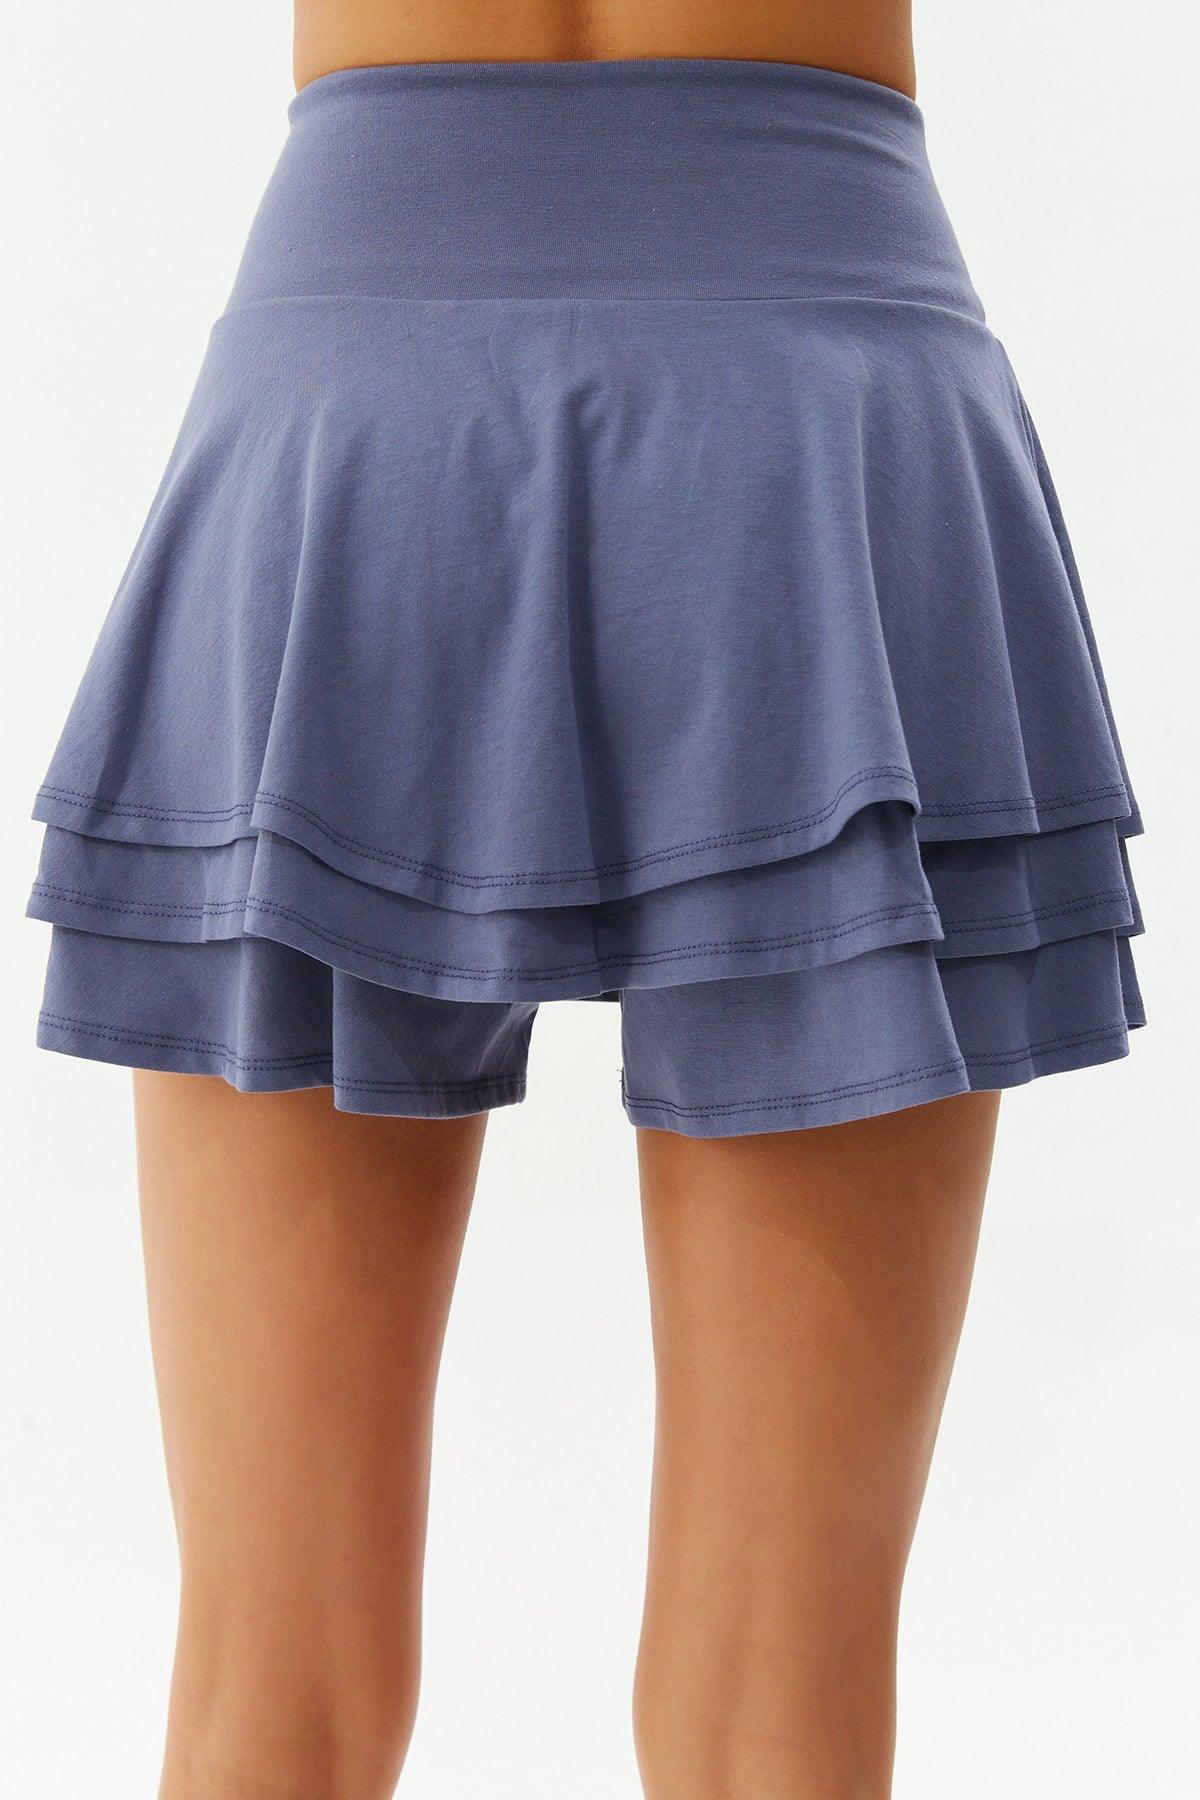 Women's Light Navy High Waist Sports Daily Summer Mini Skirt Cotton Solid Color Shorts Tennis Skirt 0110 - Swordslife